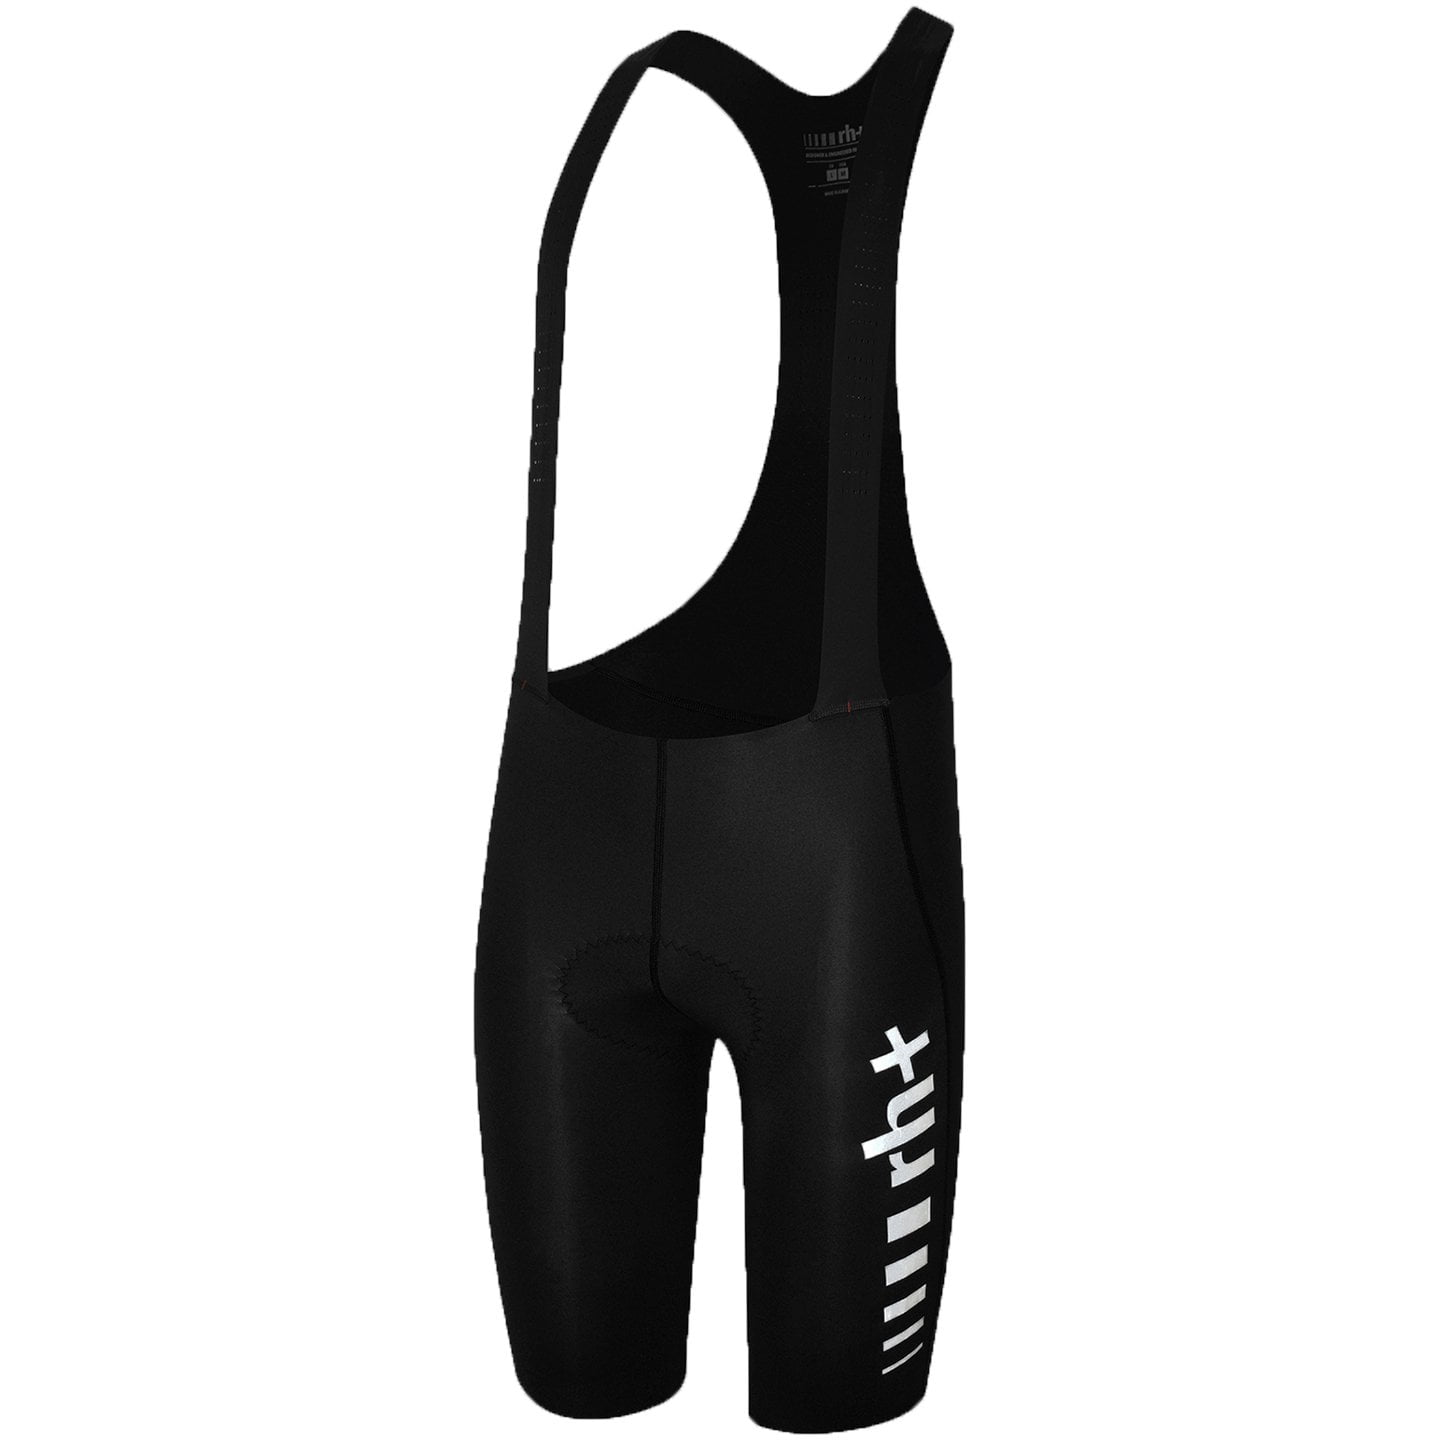 RH+ Code Bib Shorts, for men, size M, Cycle shorts, Cycling clothing